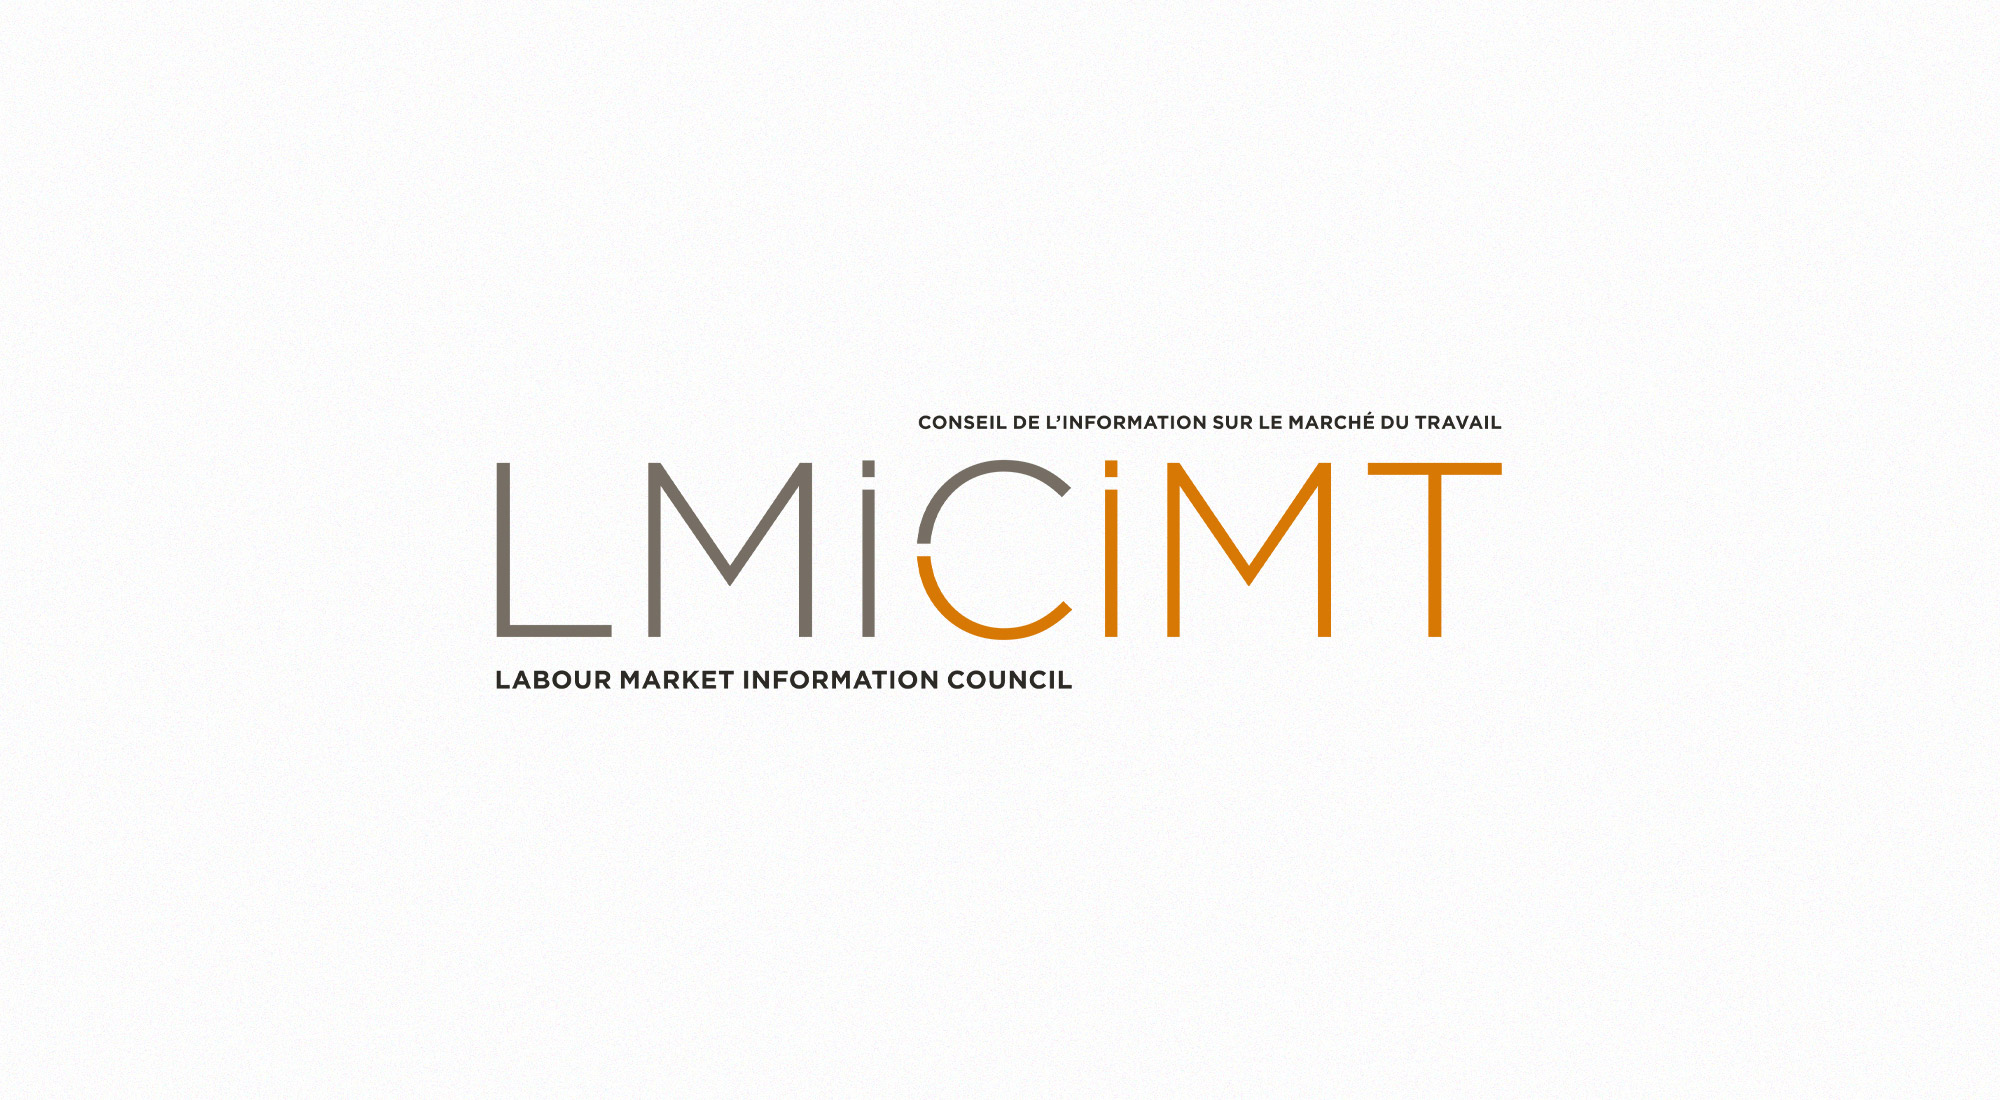 LMIC Logo